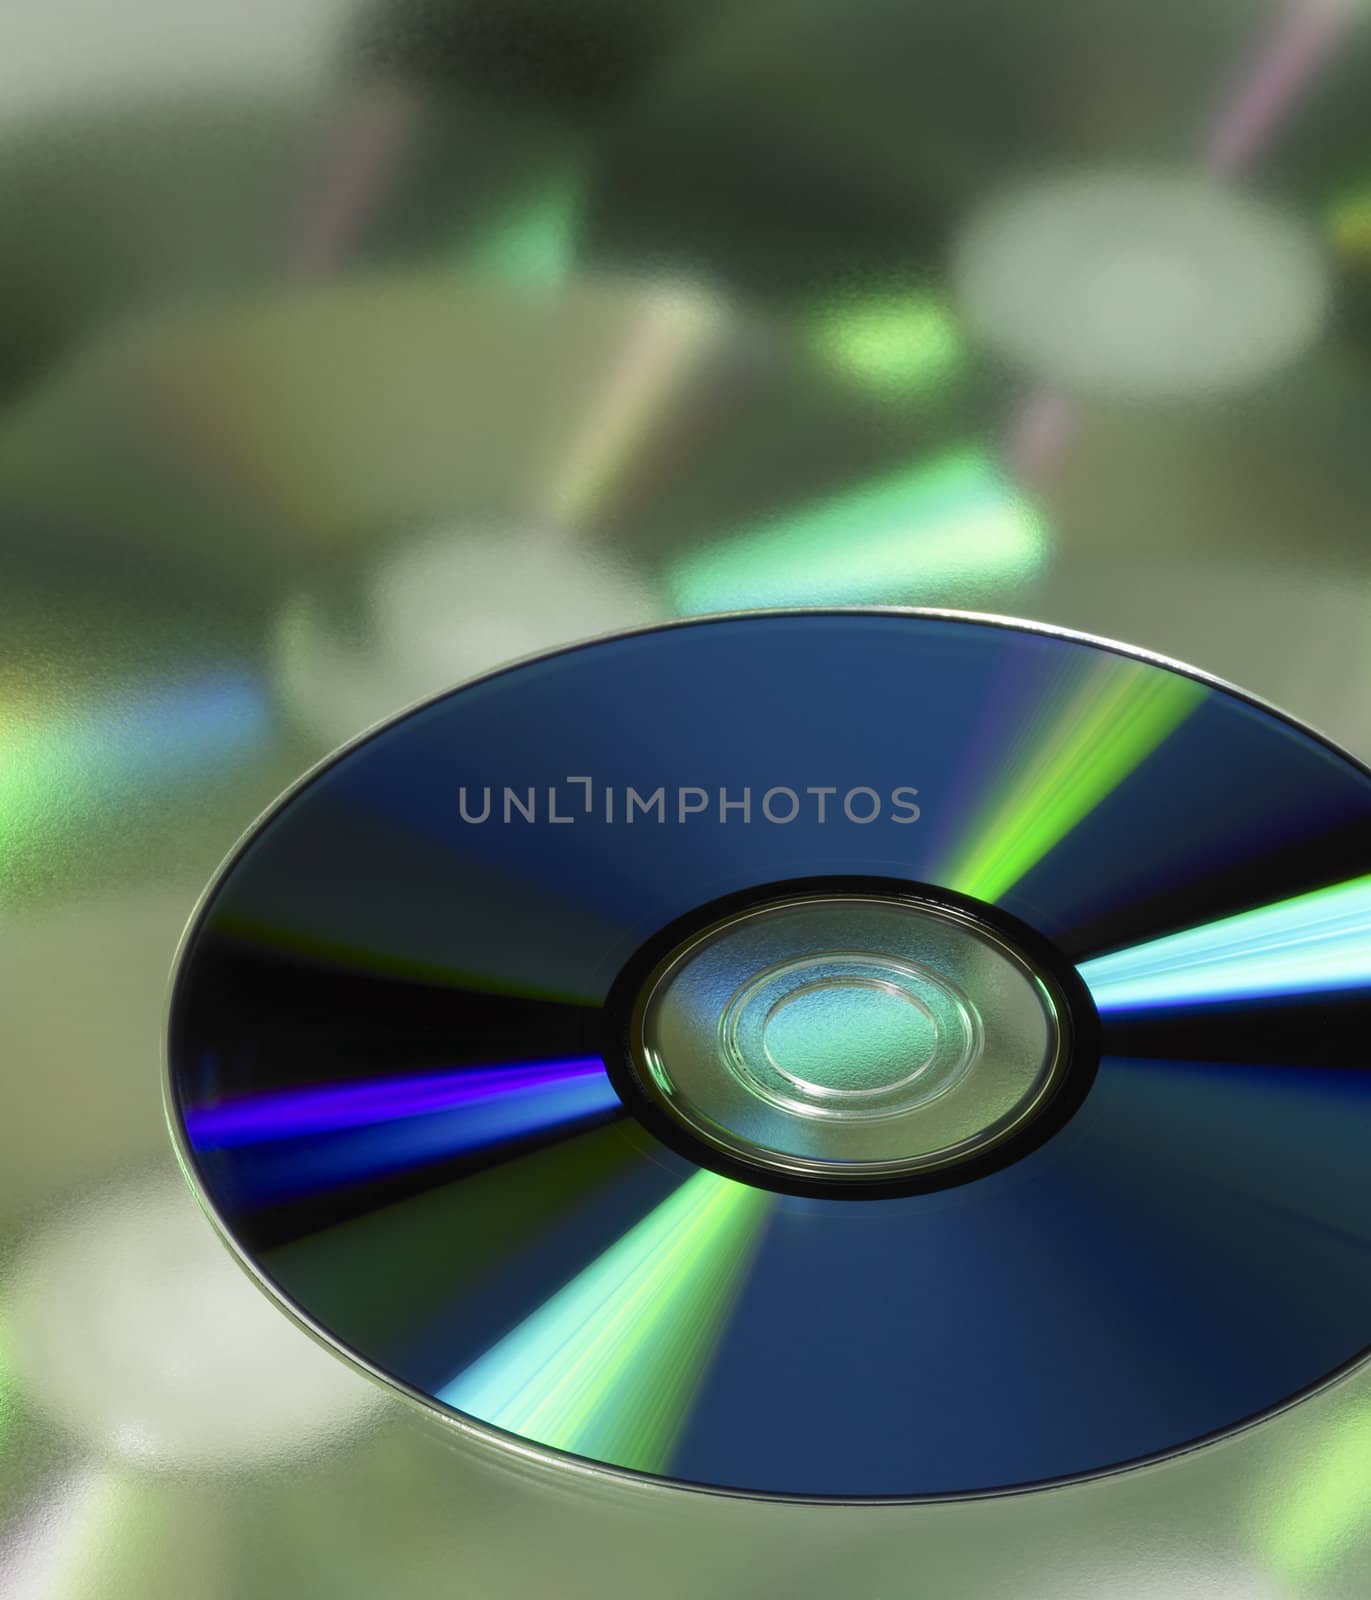 DVD in blurred background by gewoldi